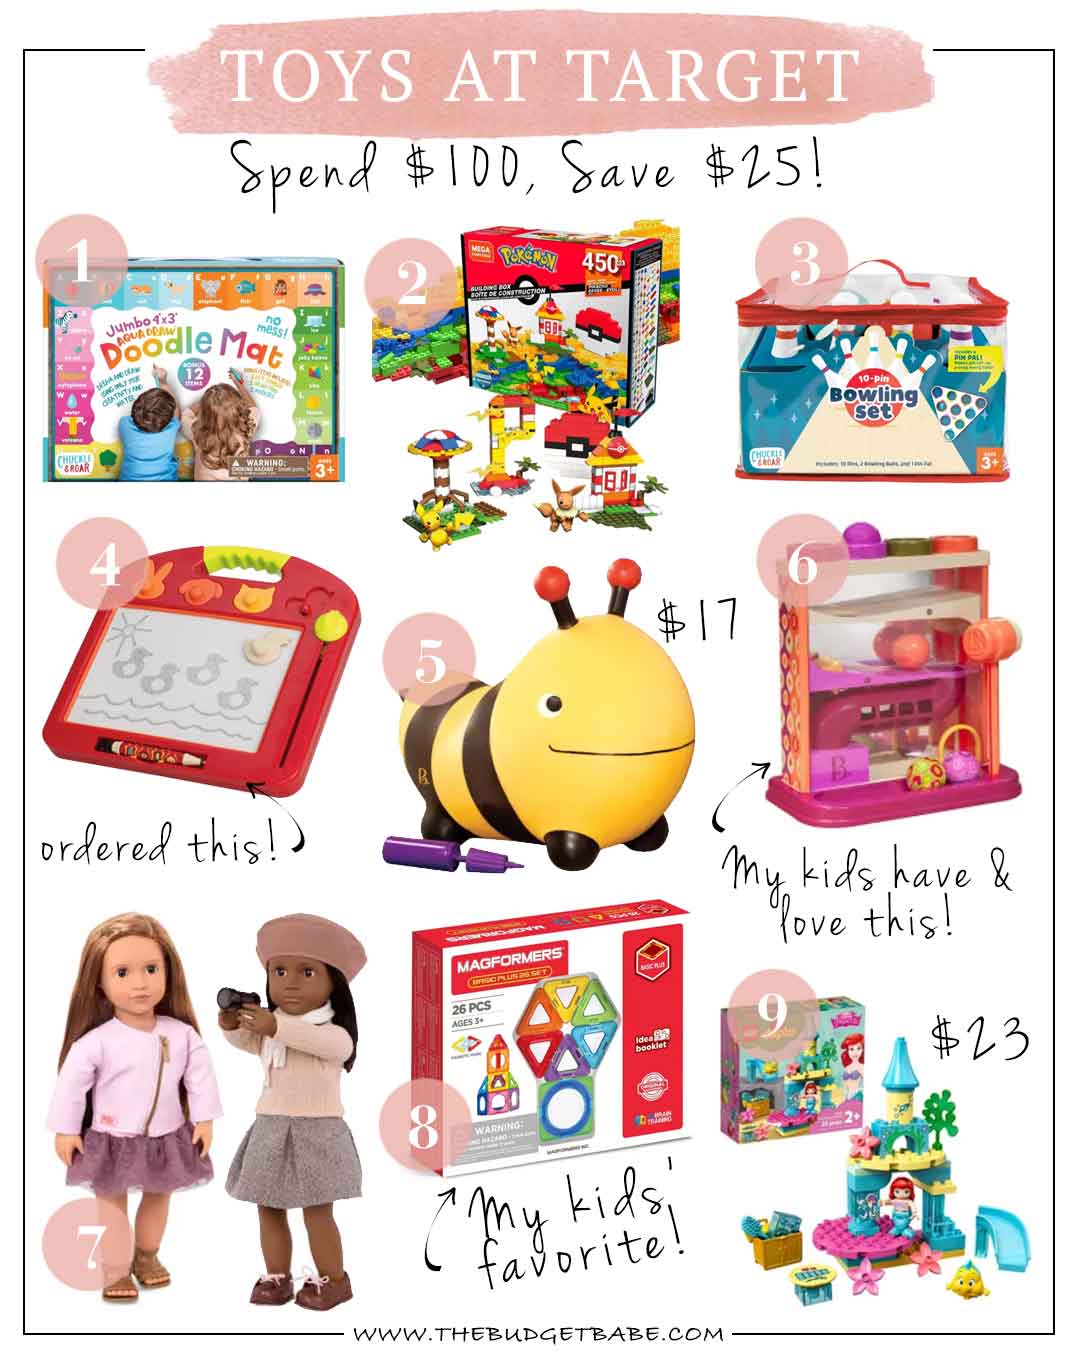 Target toy sale, spend $100 get $25 off!